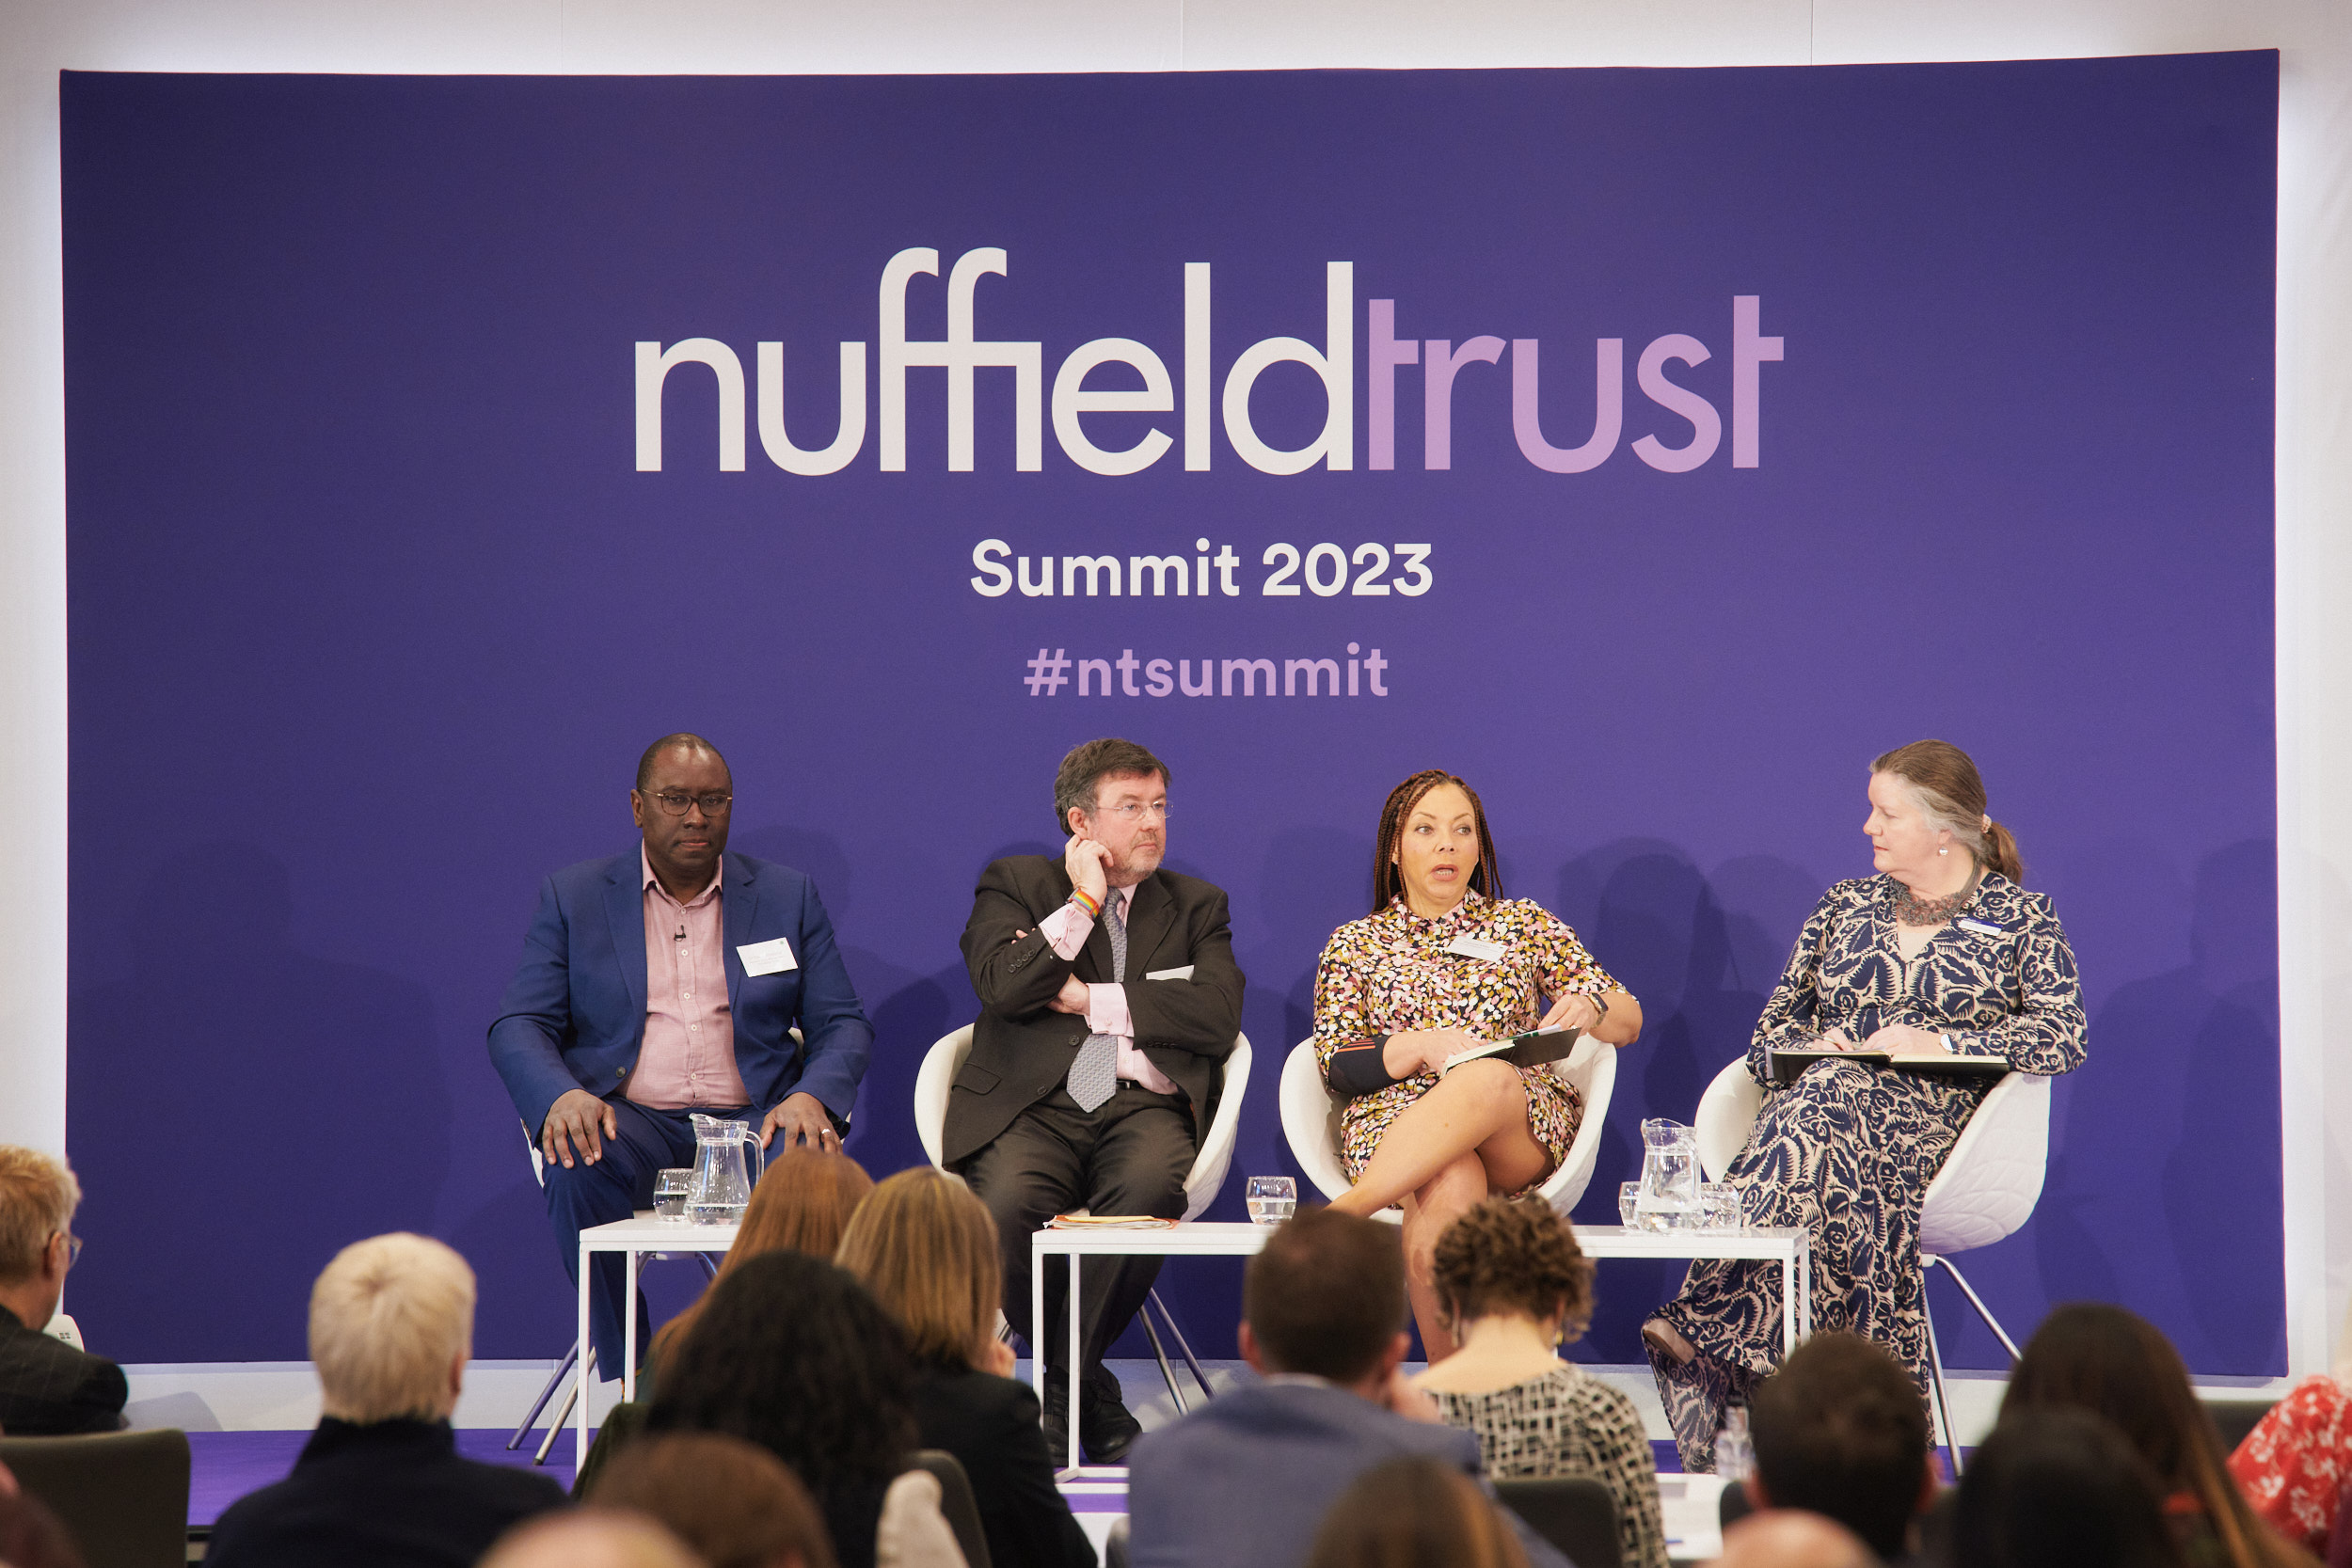 Panel at Nuffield Trust Summit 2023